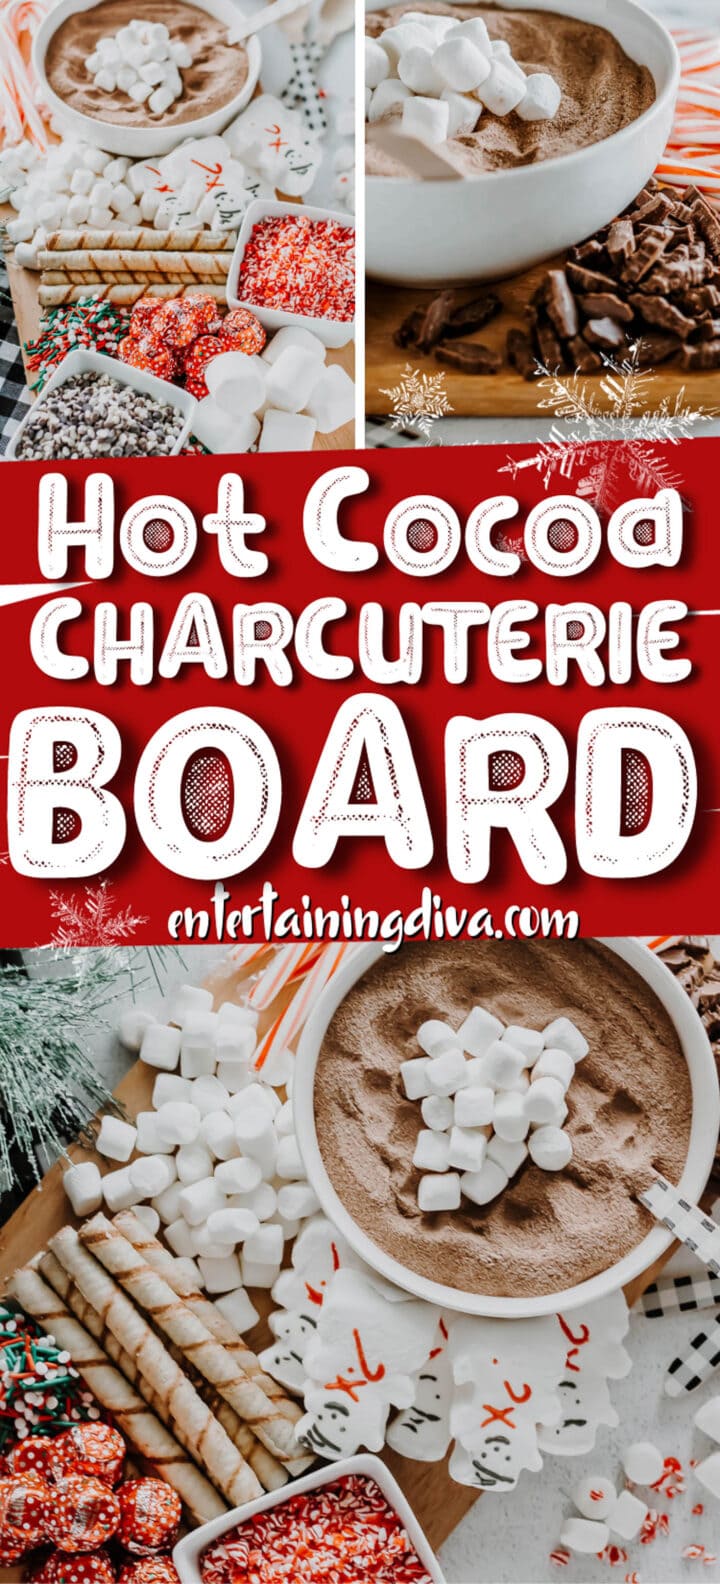 Hot chocolate charcuterie board.